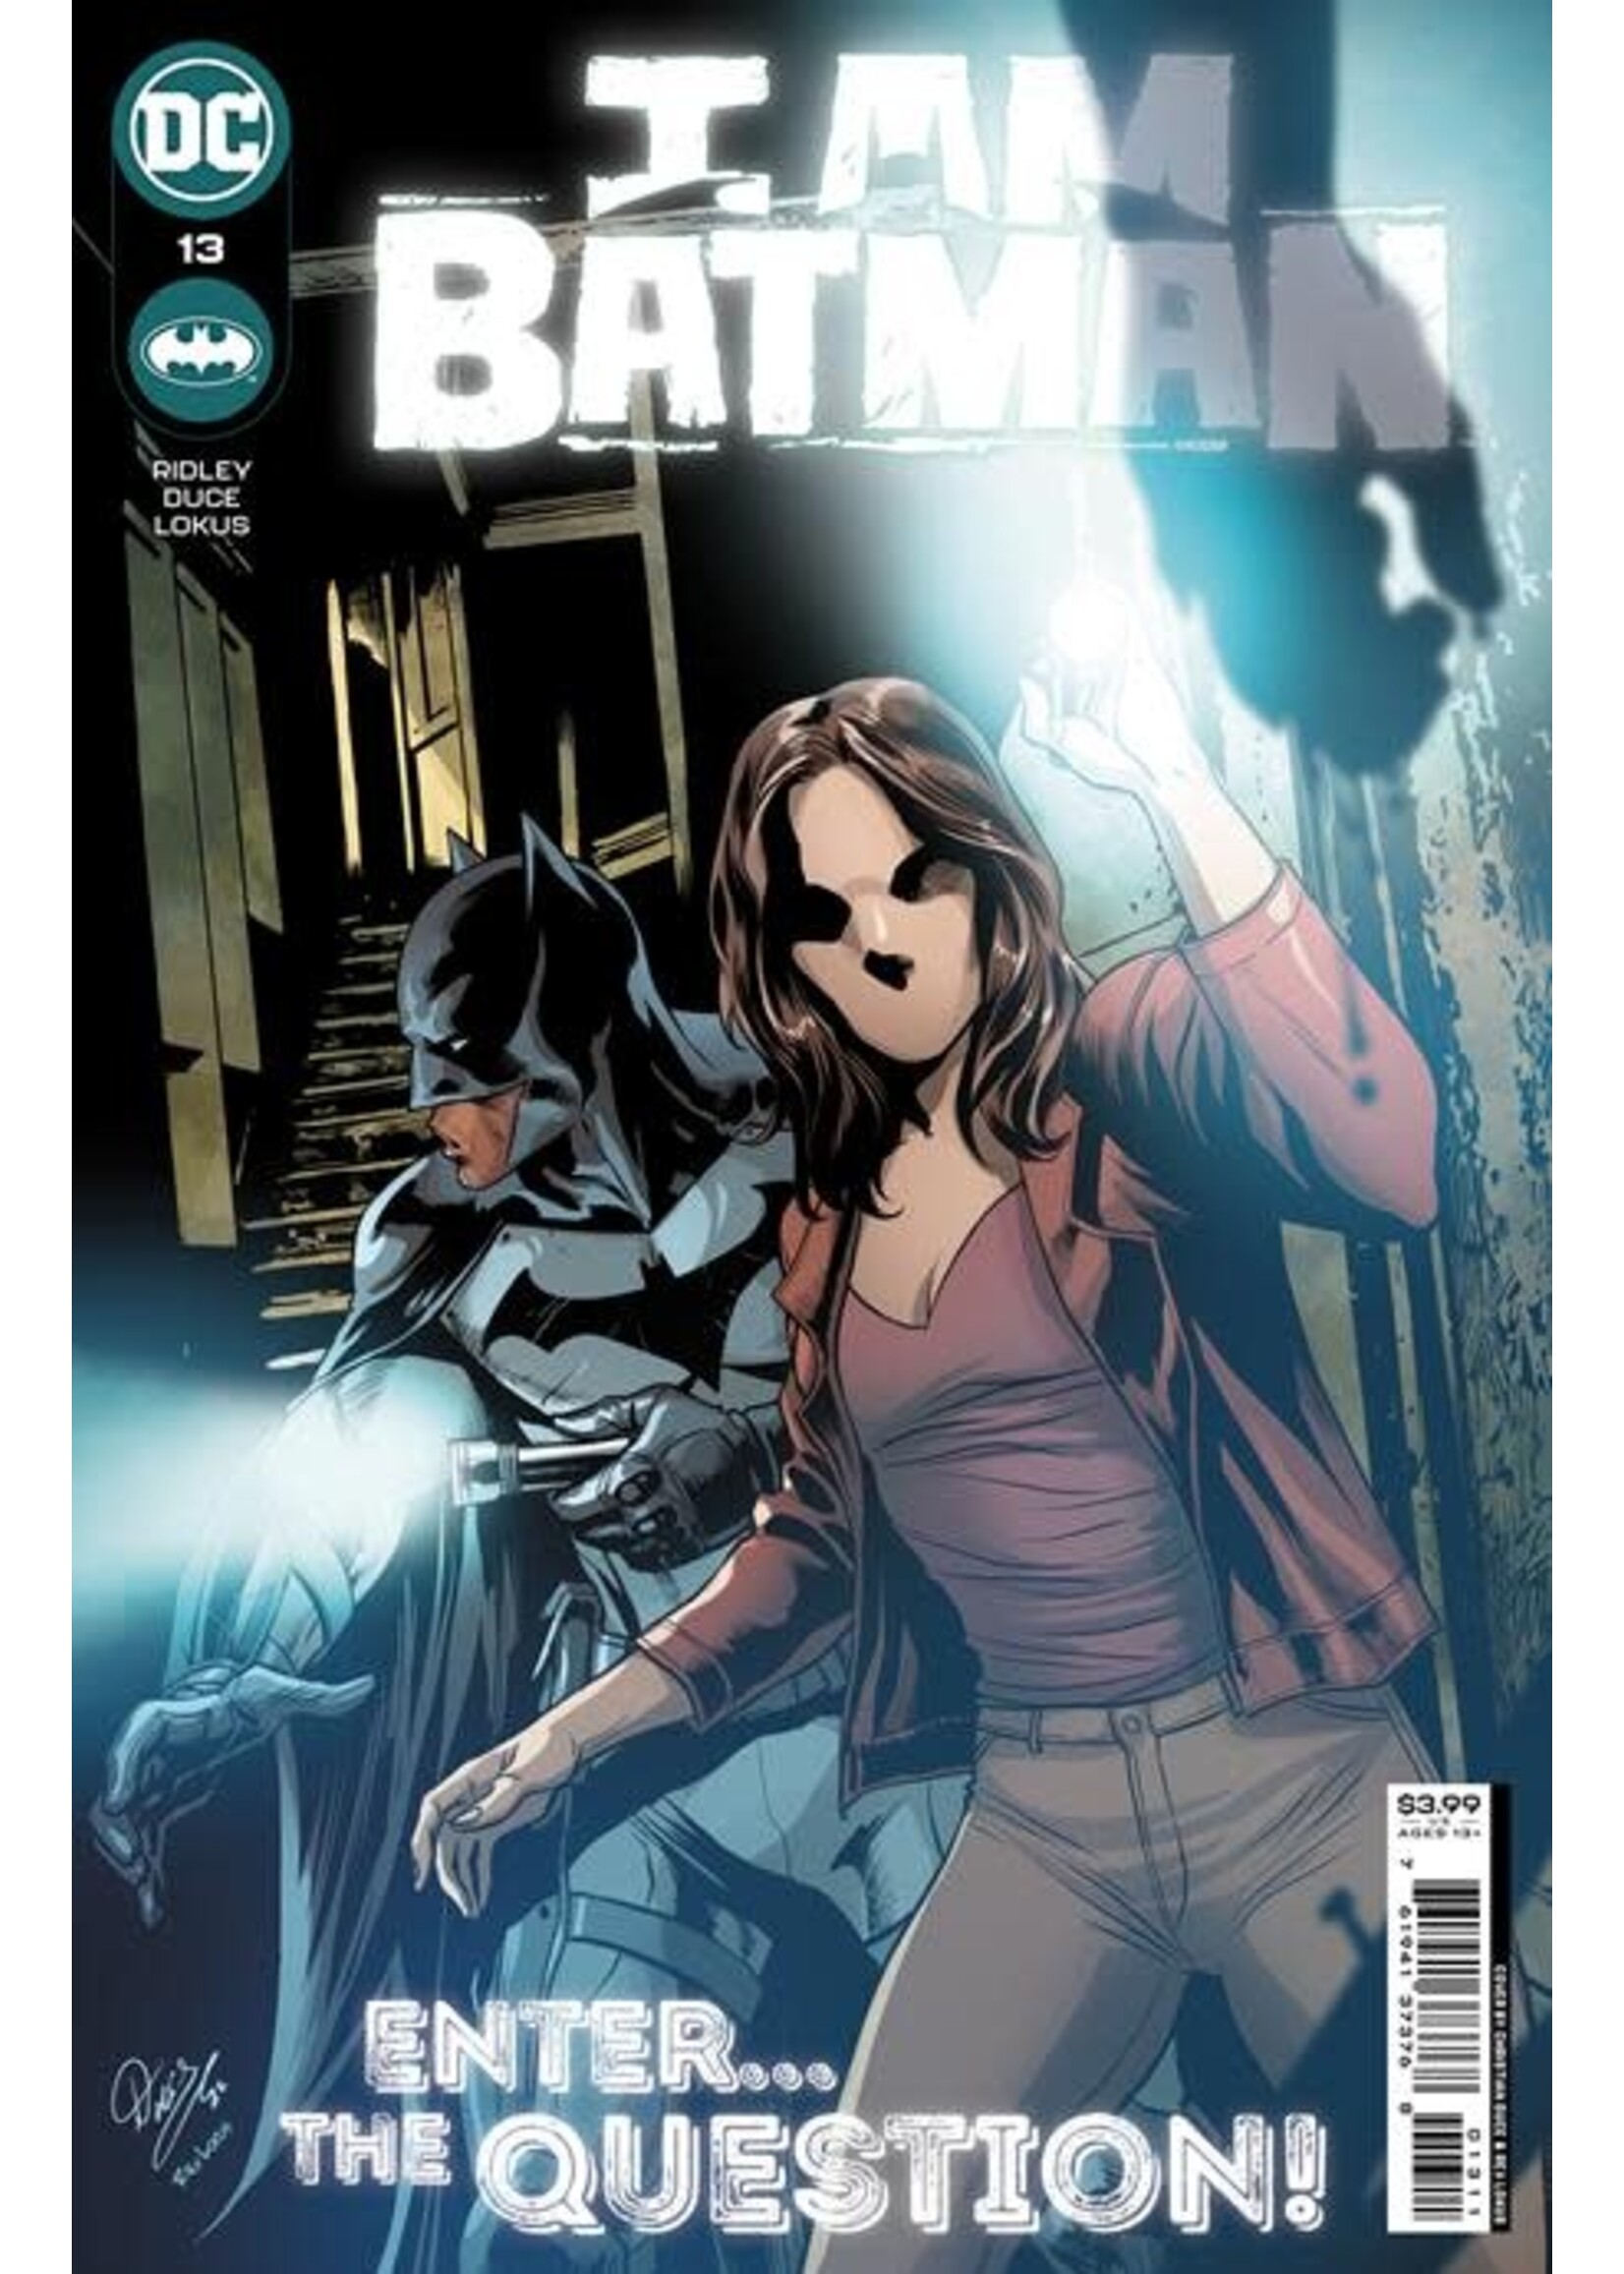 DC COMICS I AM BATMAN issues #9-13 bundle